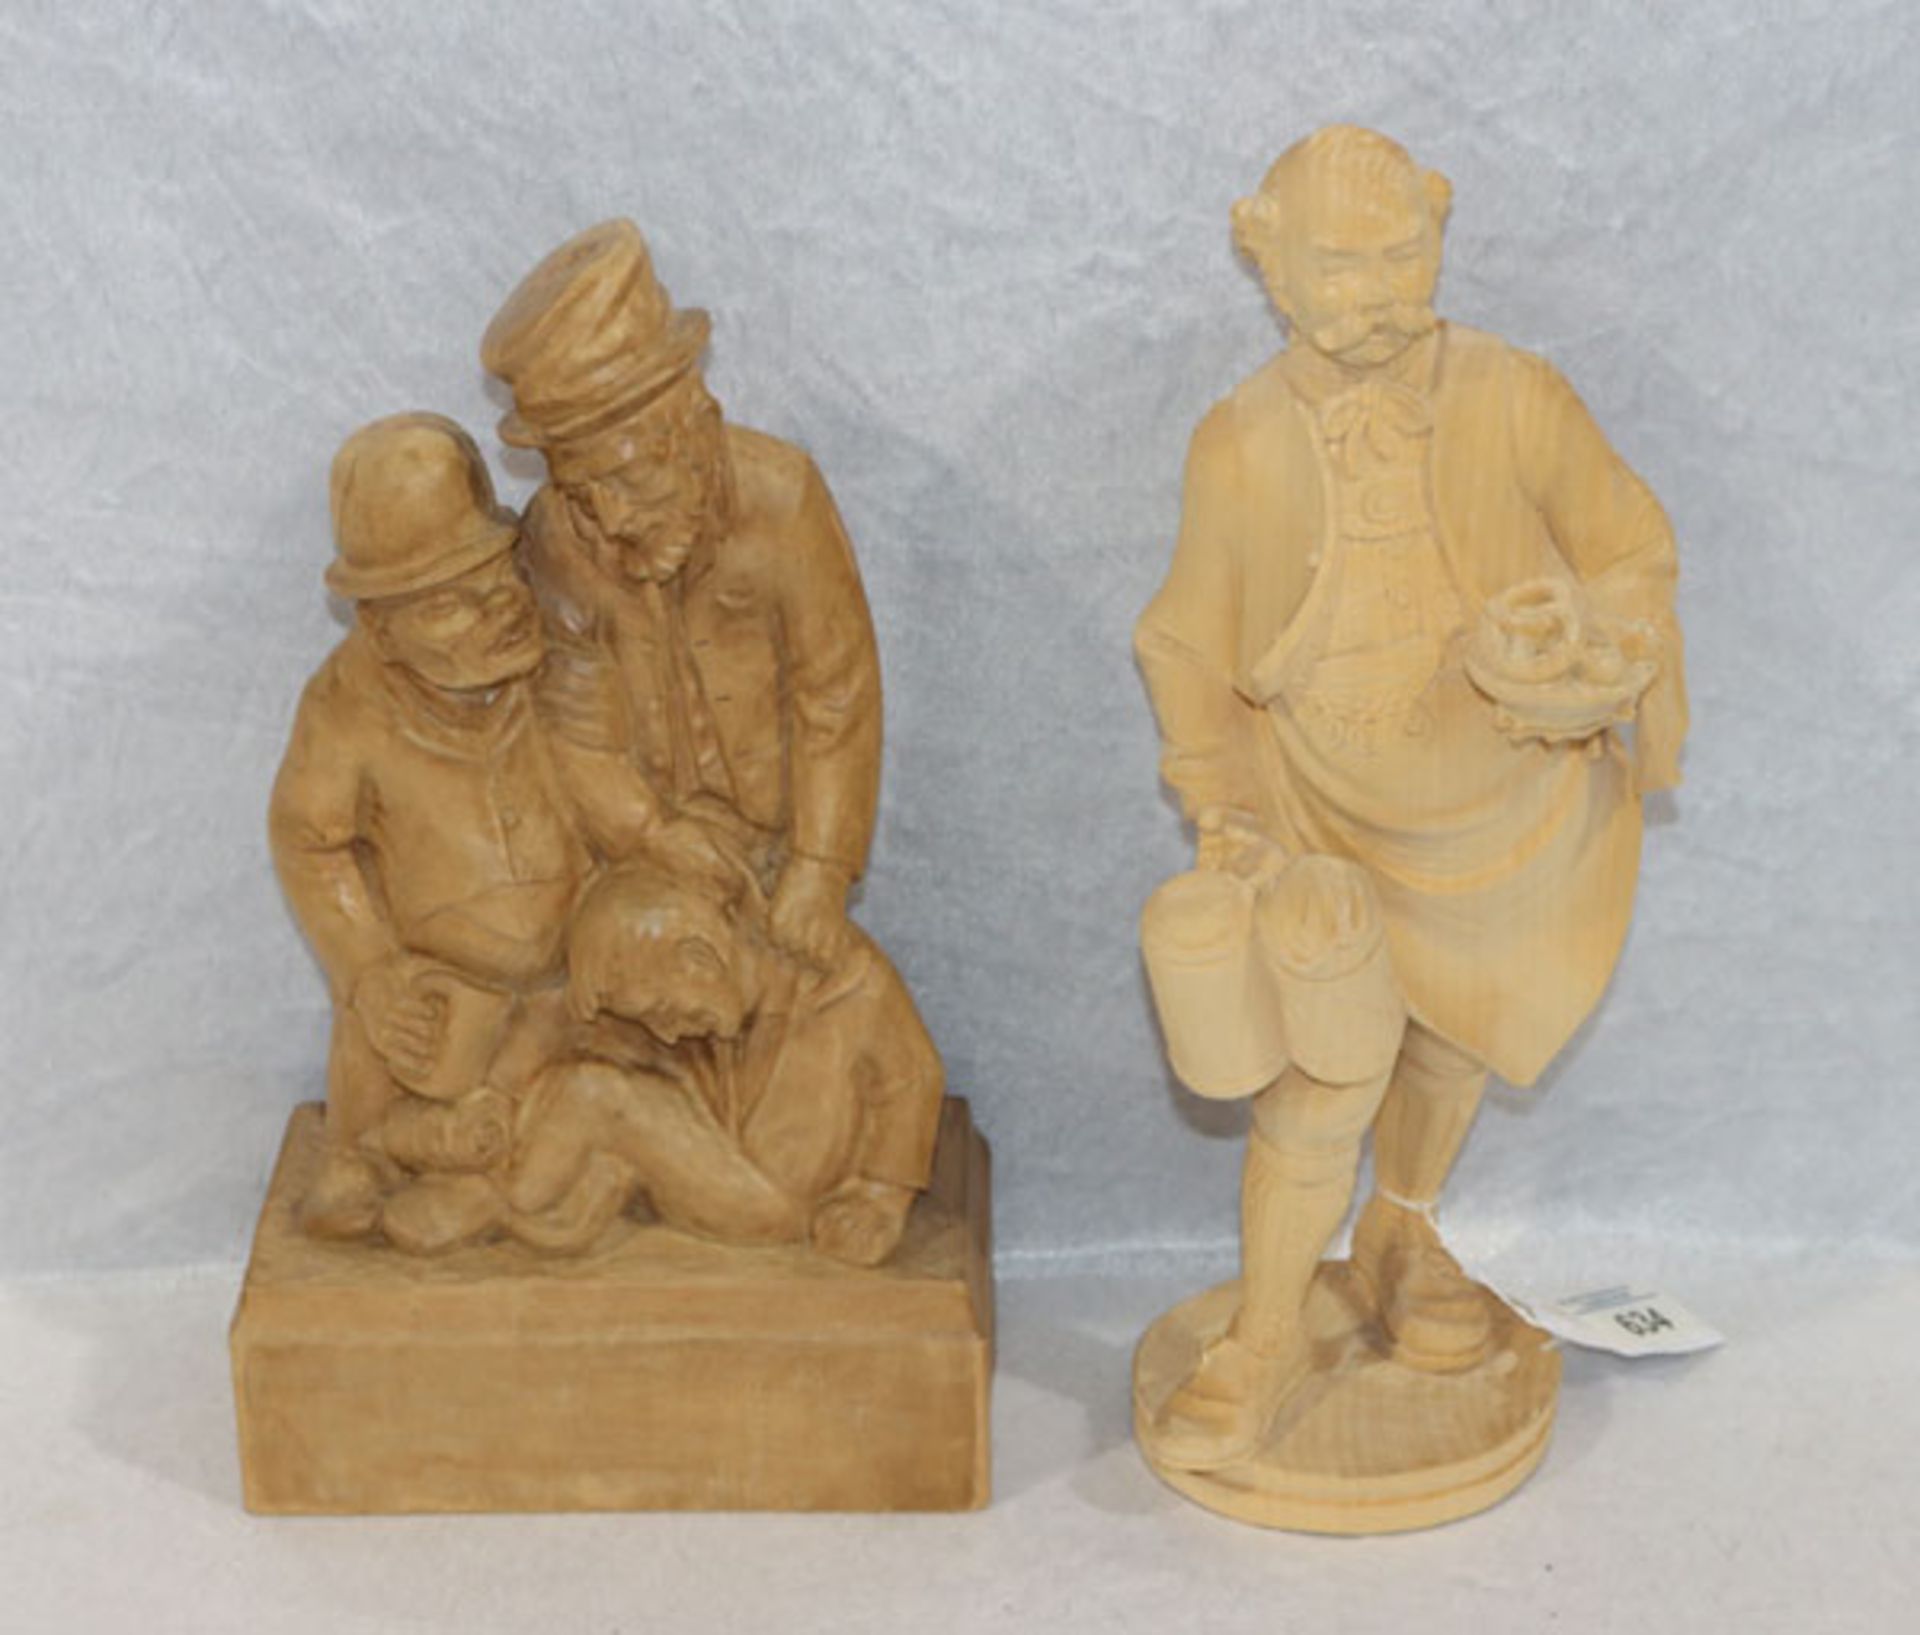 Holz Figurengruppe '3 Männer', H 29 cm, und Holzfigur 'Wirt'